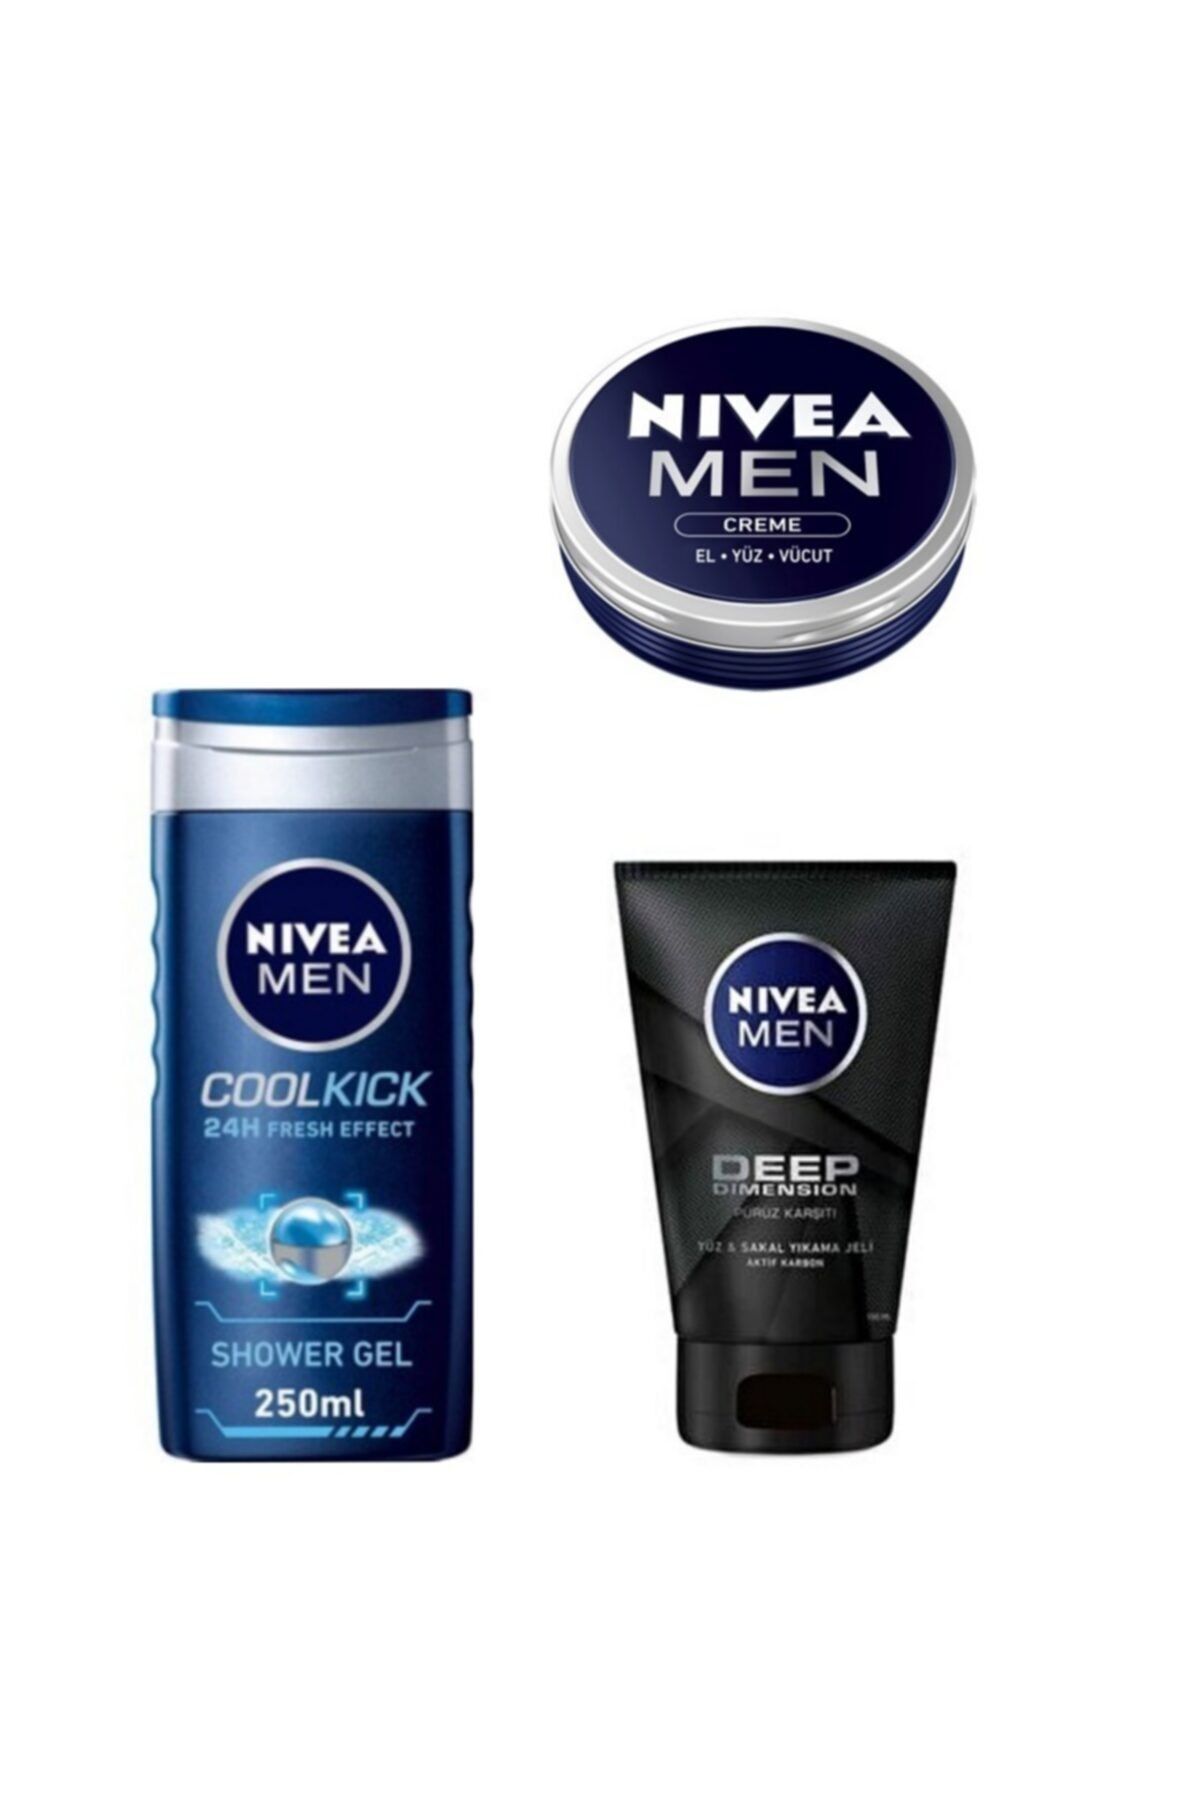 NIVEA Men Deep Dimension Yüz-sakal Tem. Jeli 100ml+cool Kick Duş Jeli 250 Ml+ Men Krem 30 Ml